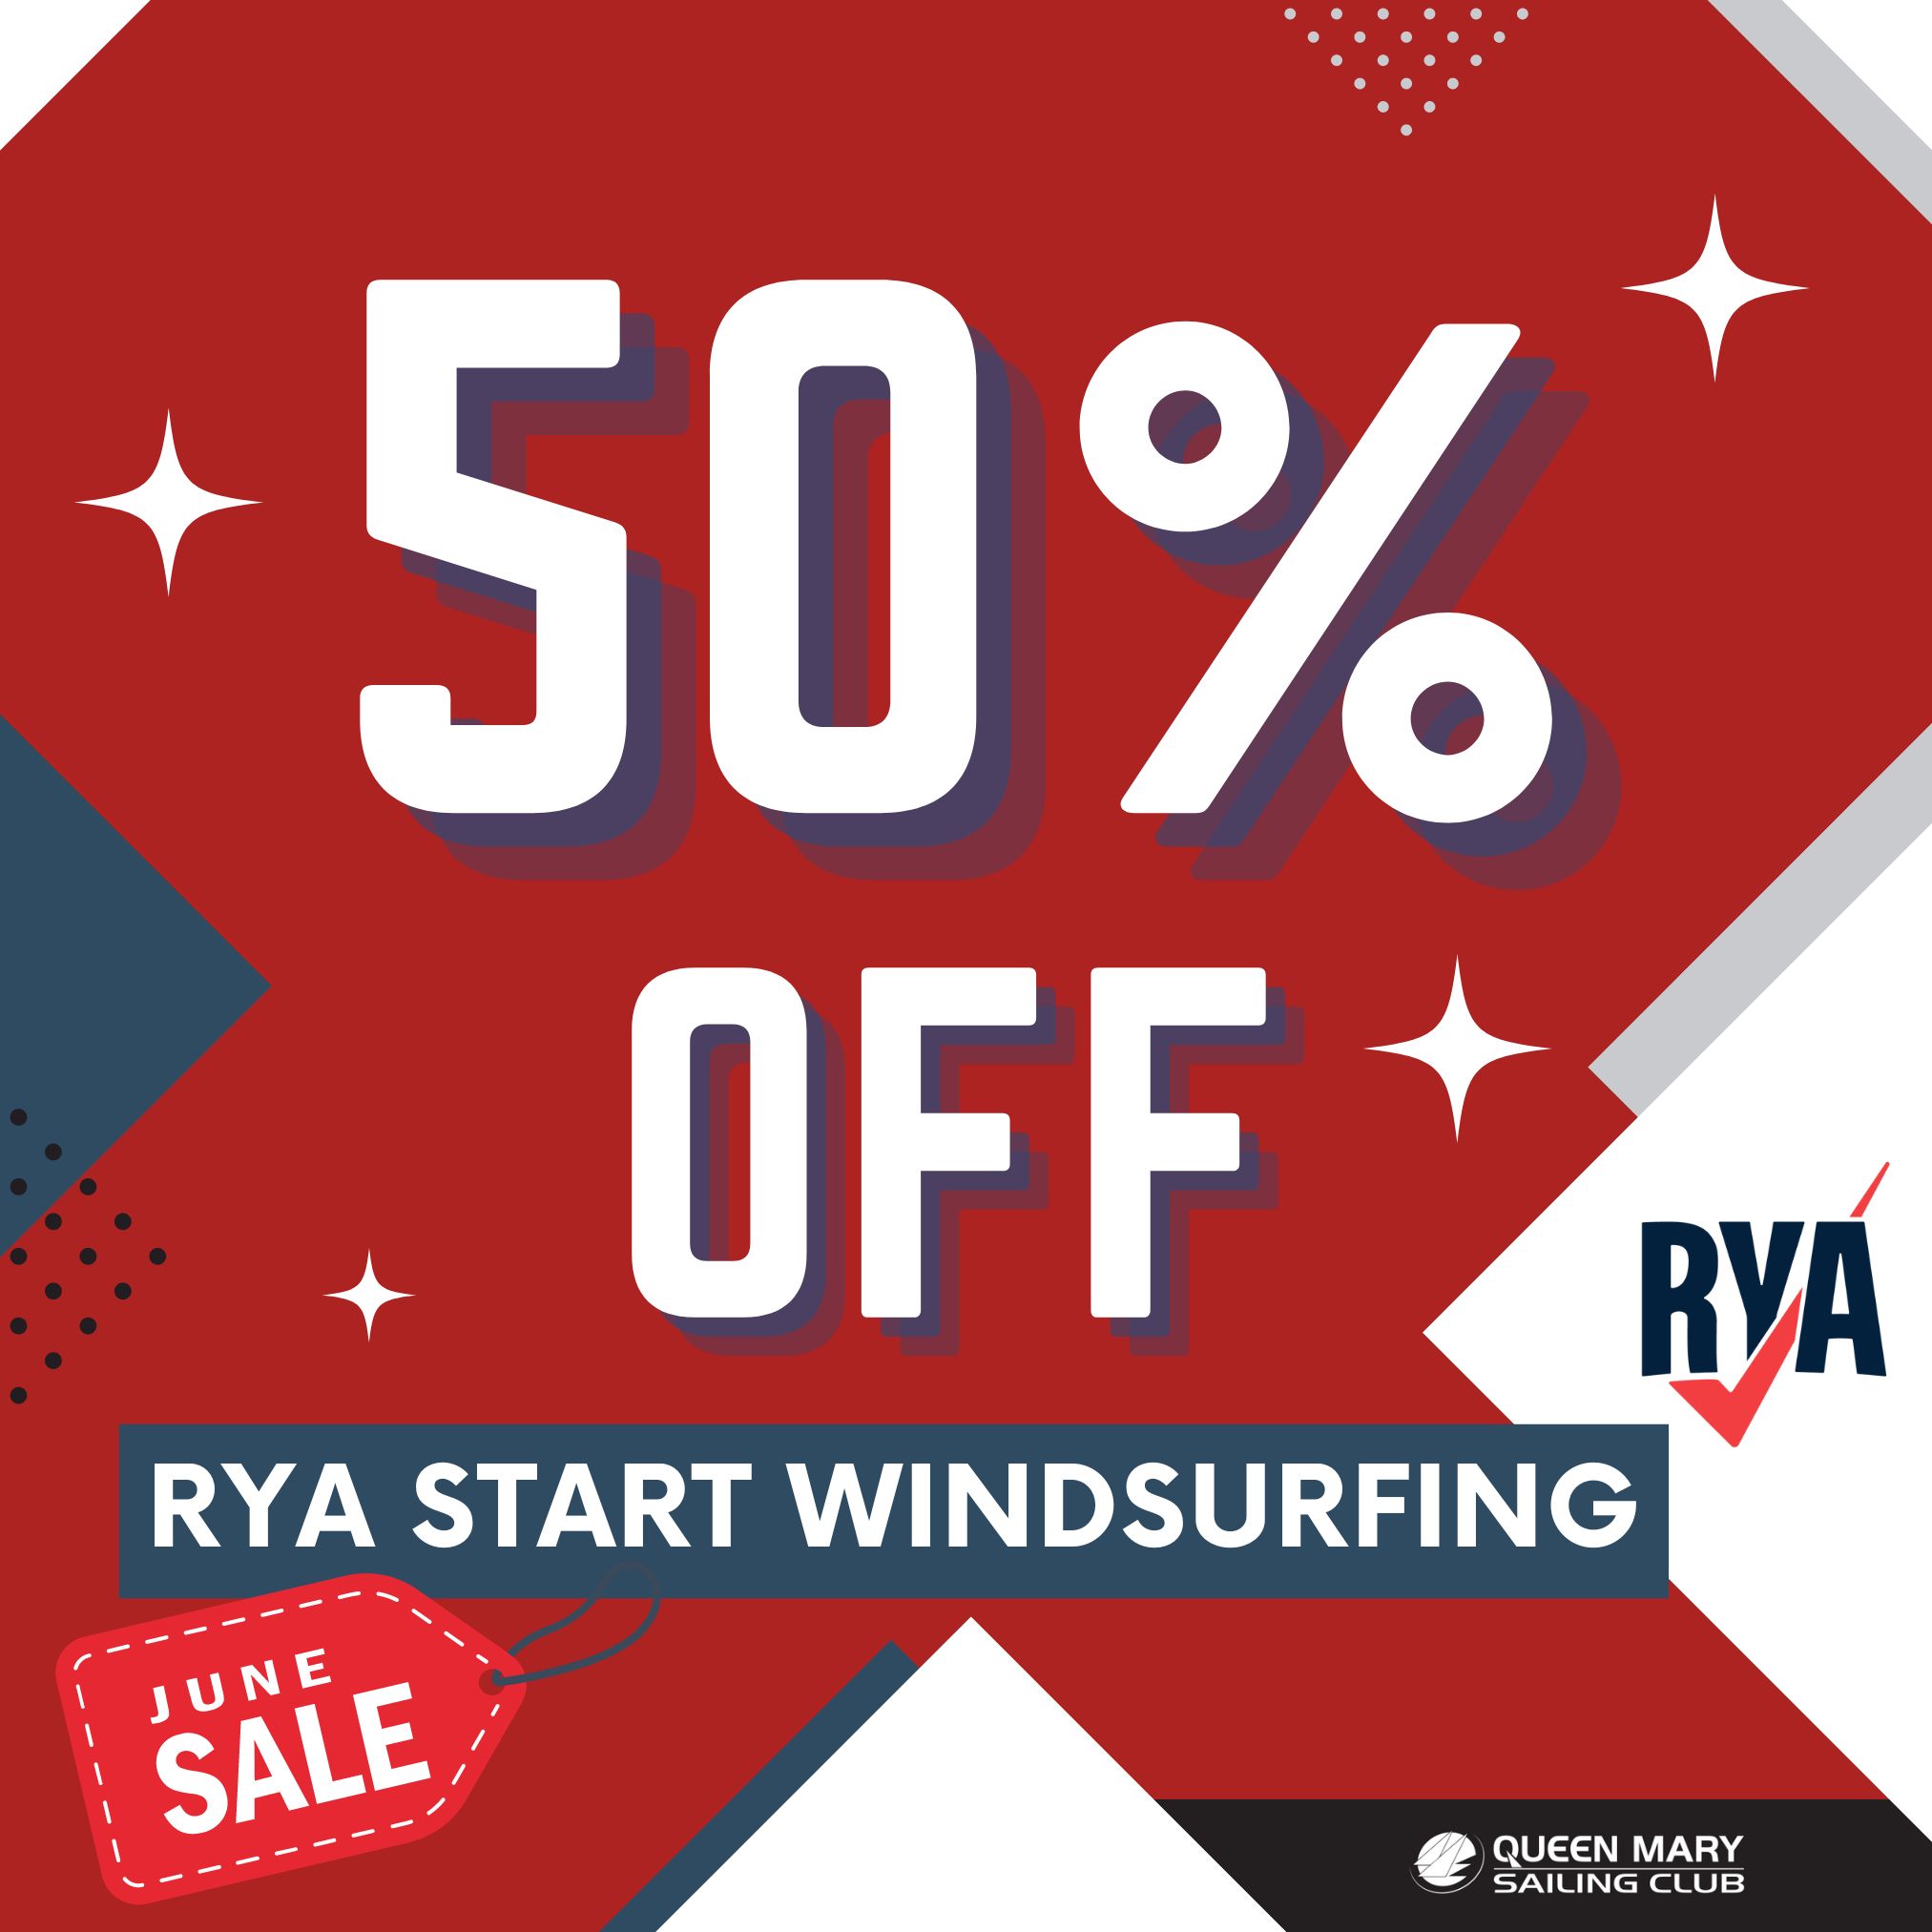 50 off Discount Saving Offer Discounted RYA Start Windsurfing2